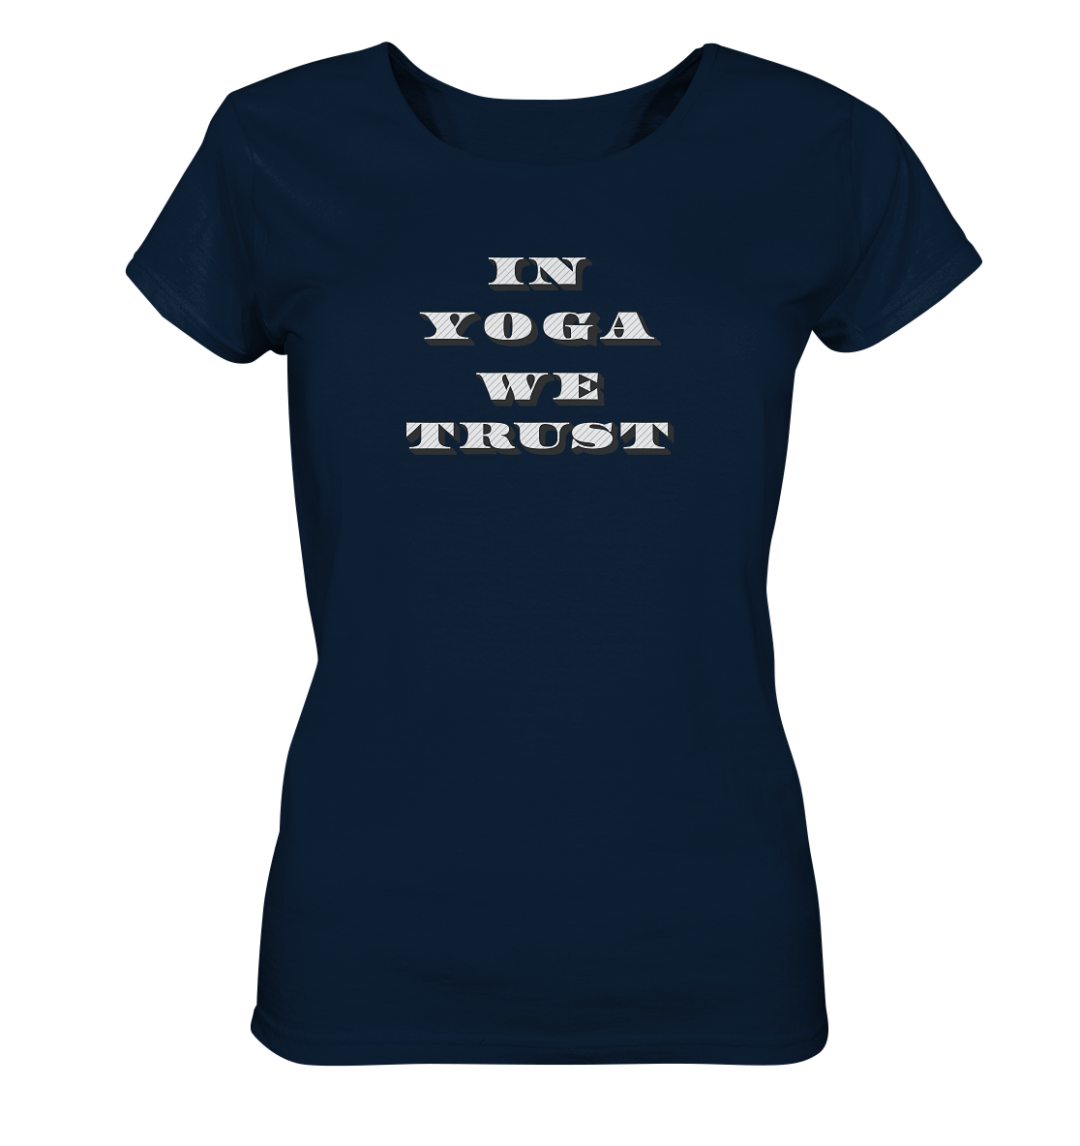 In Yoga we trust - Damen bio-baumwolle shirt